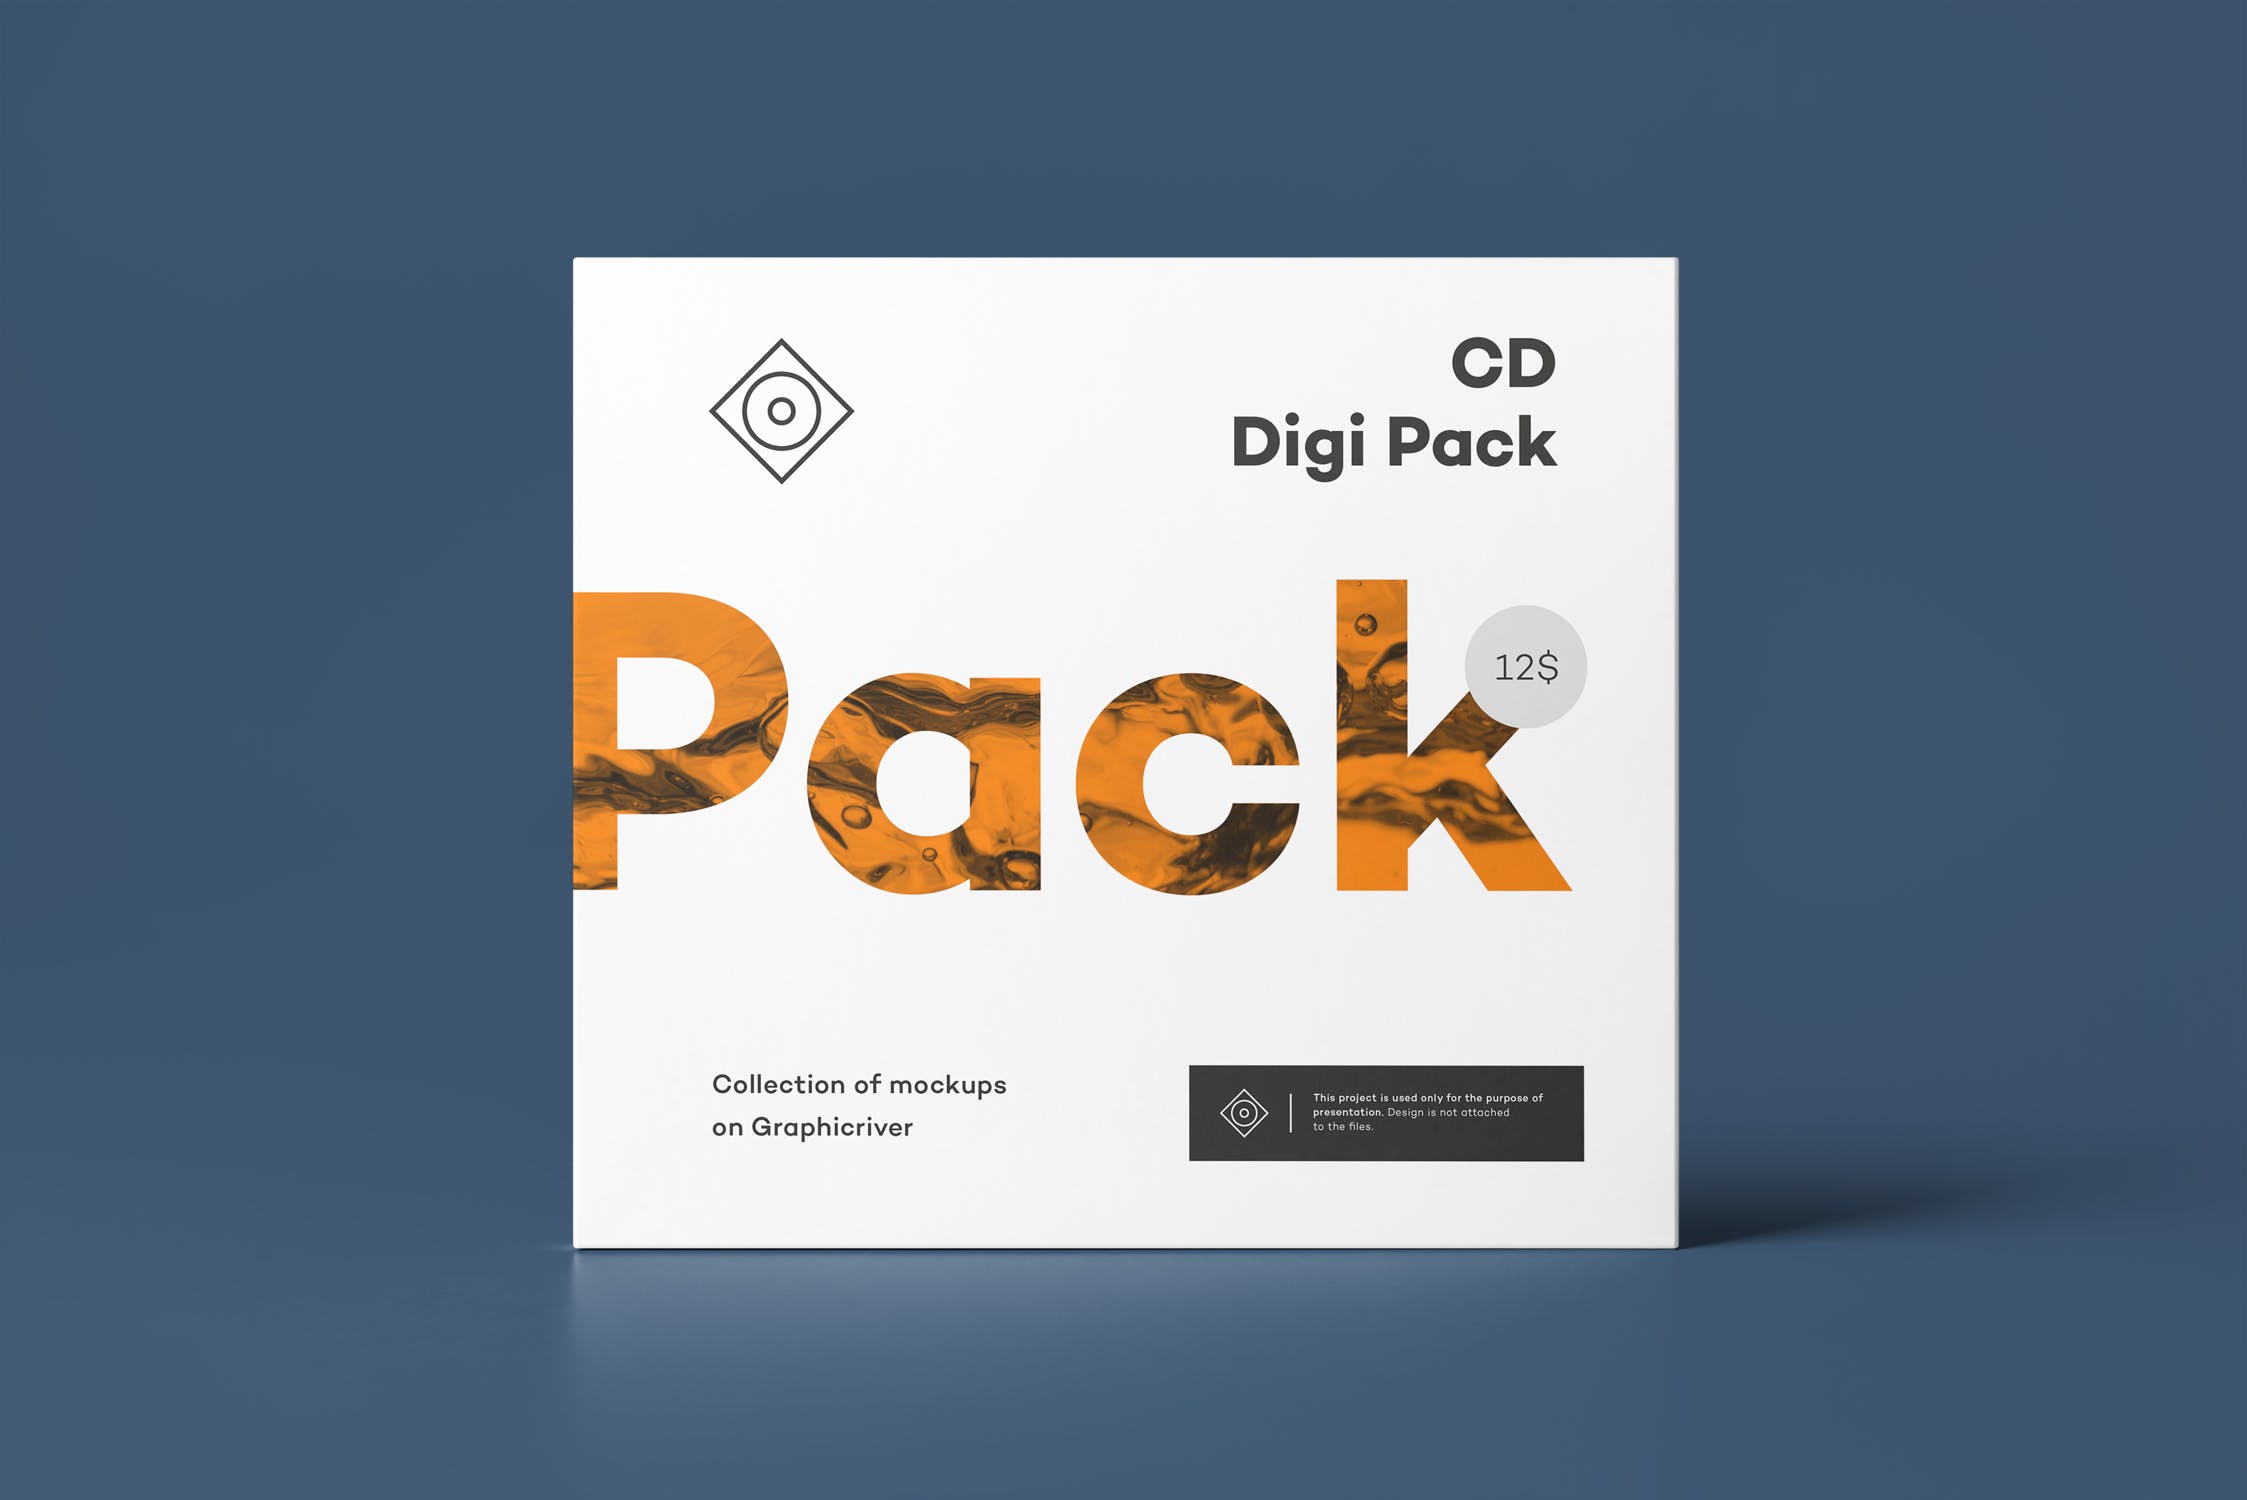 CD光碟封面&包装盒设计图素材库精选模板v8 CD Digi Pack Mock-up 8插图(12)